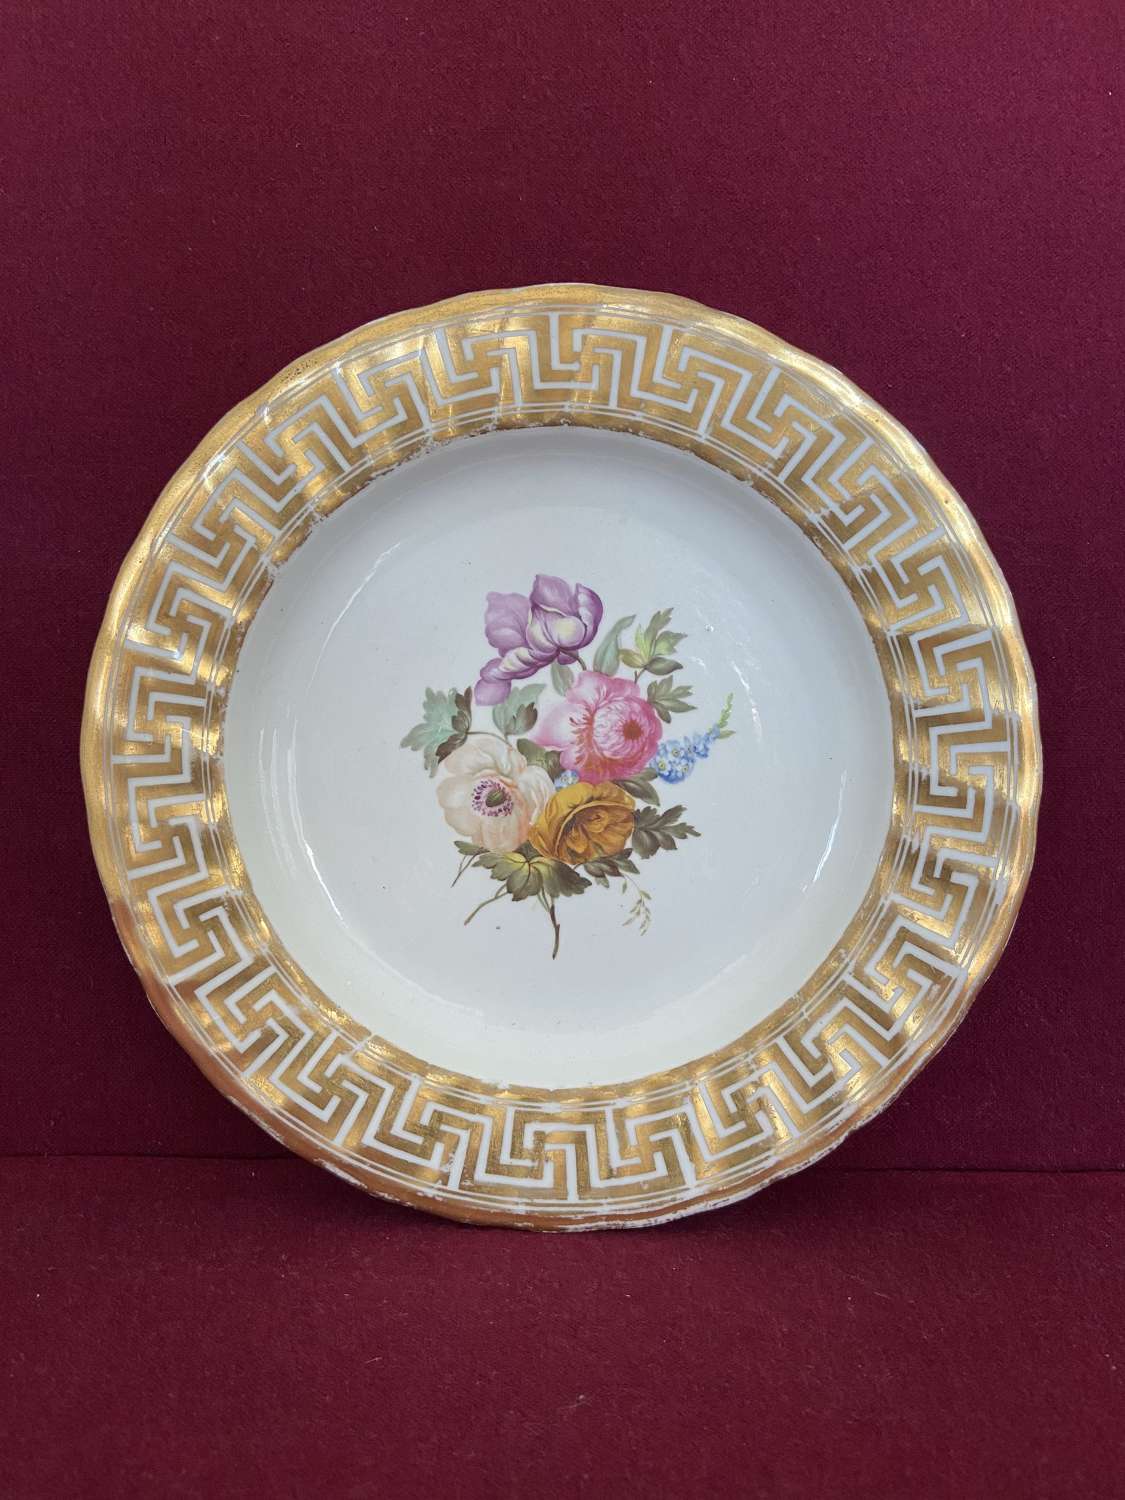 A fine Derby porcelain dessert plate c.1790-1800